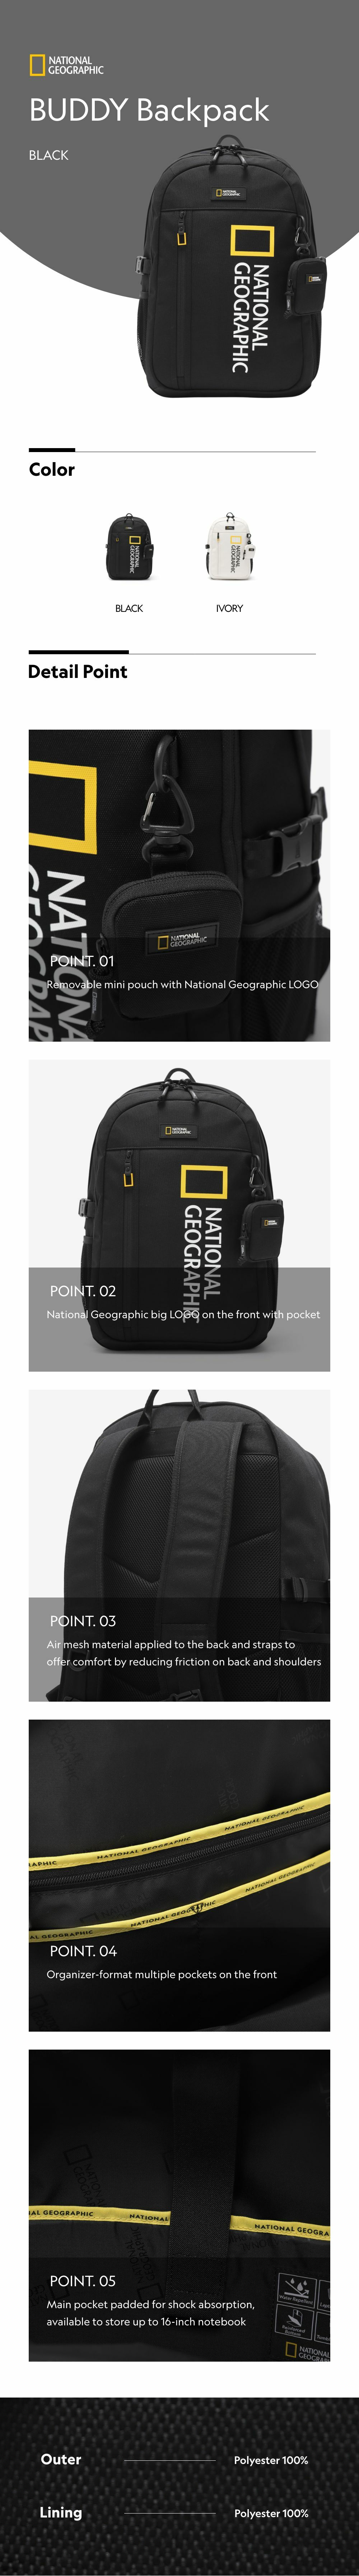 National Geographic N241ABG560 Buddy Backpack BLACK